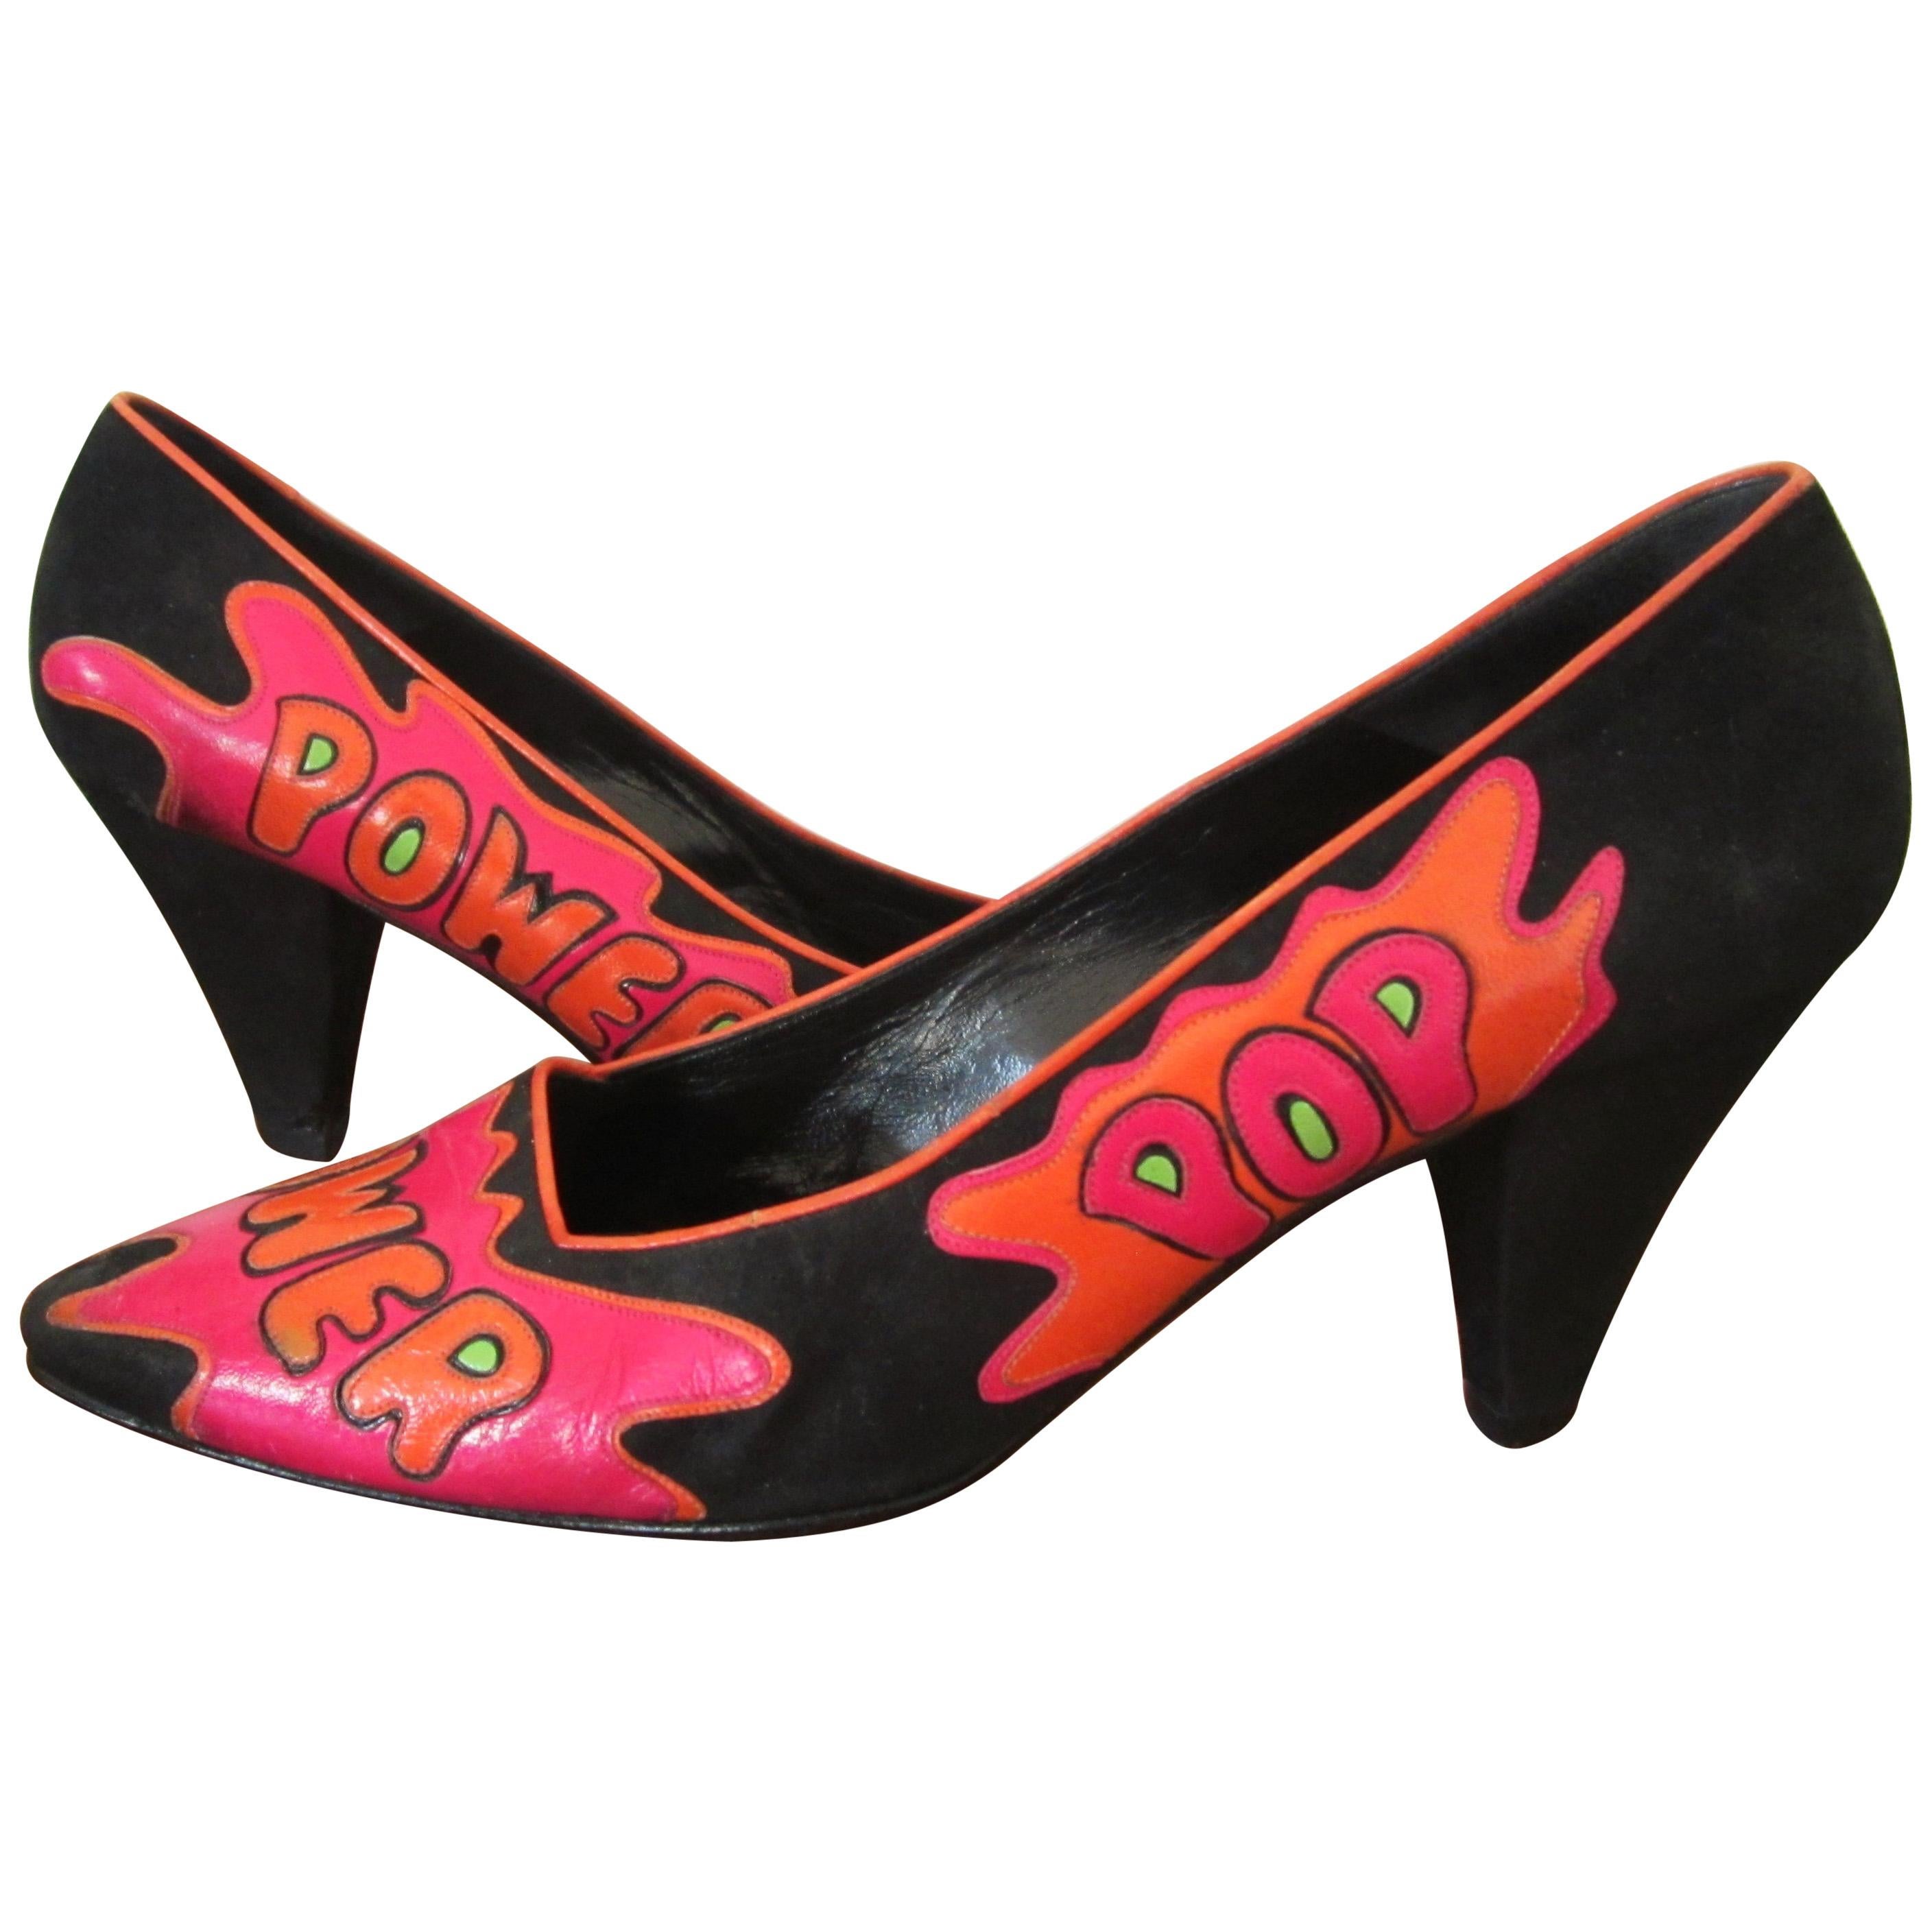 Susan Bennis Warren Edwards POP POWER Leather Suede Pump Shoes Pop Art 